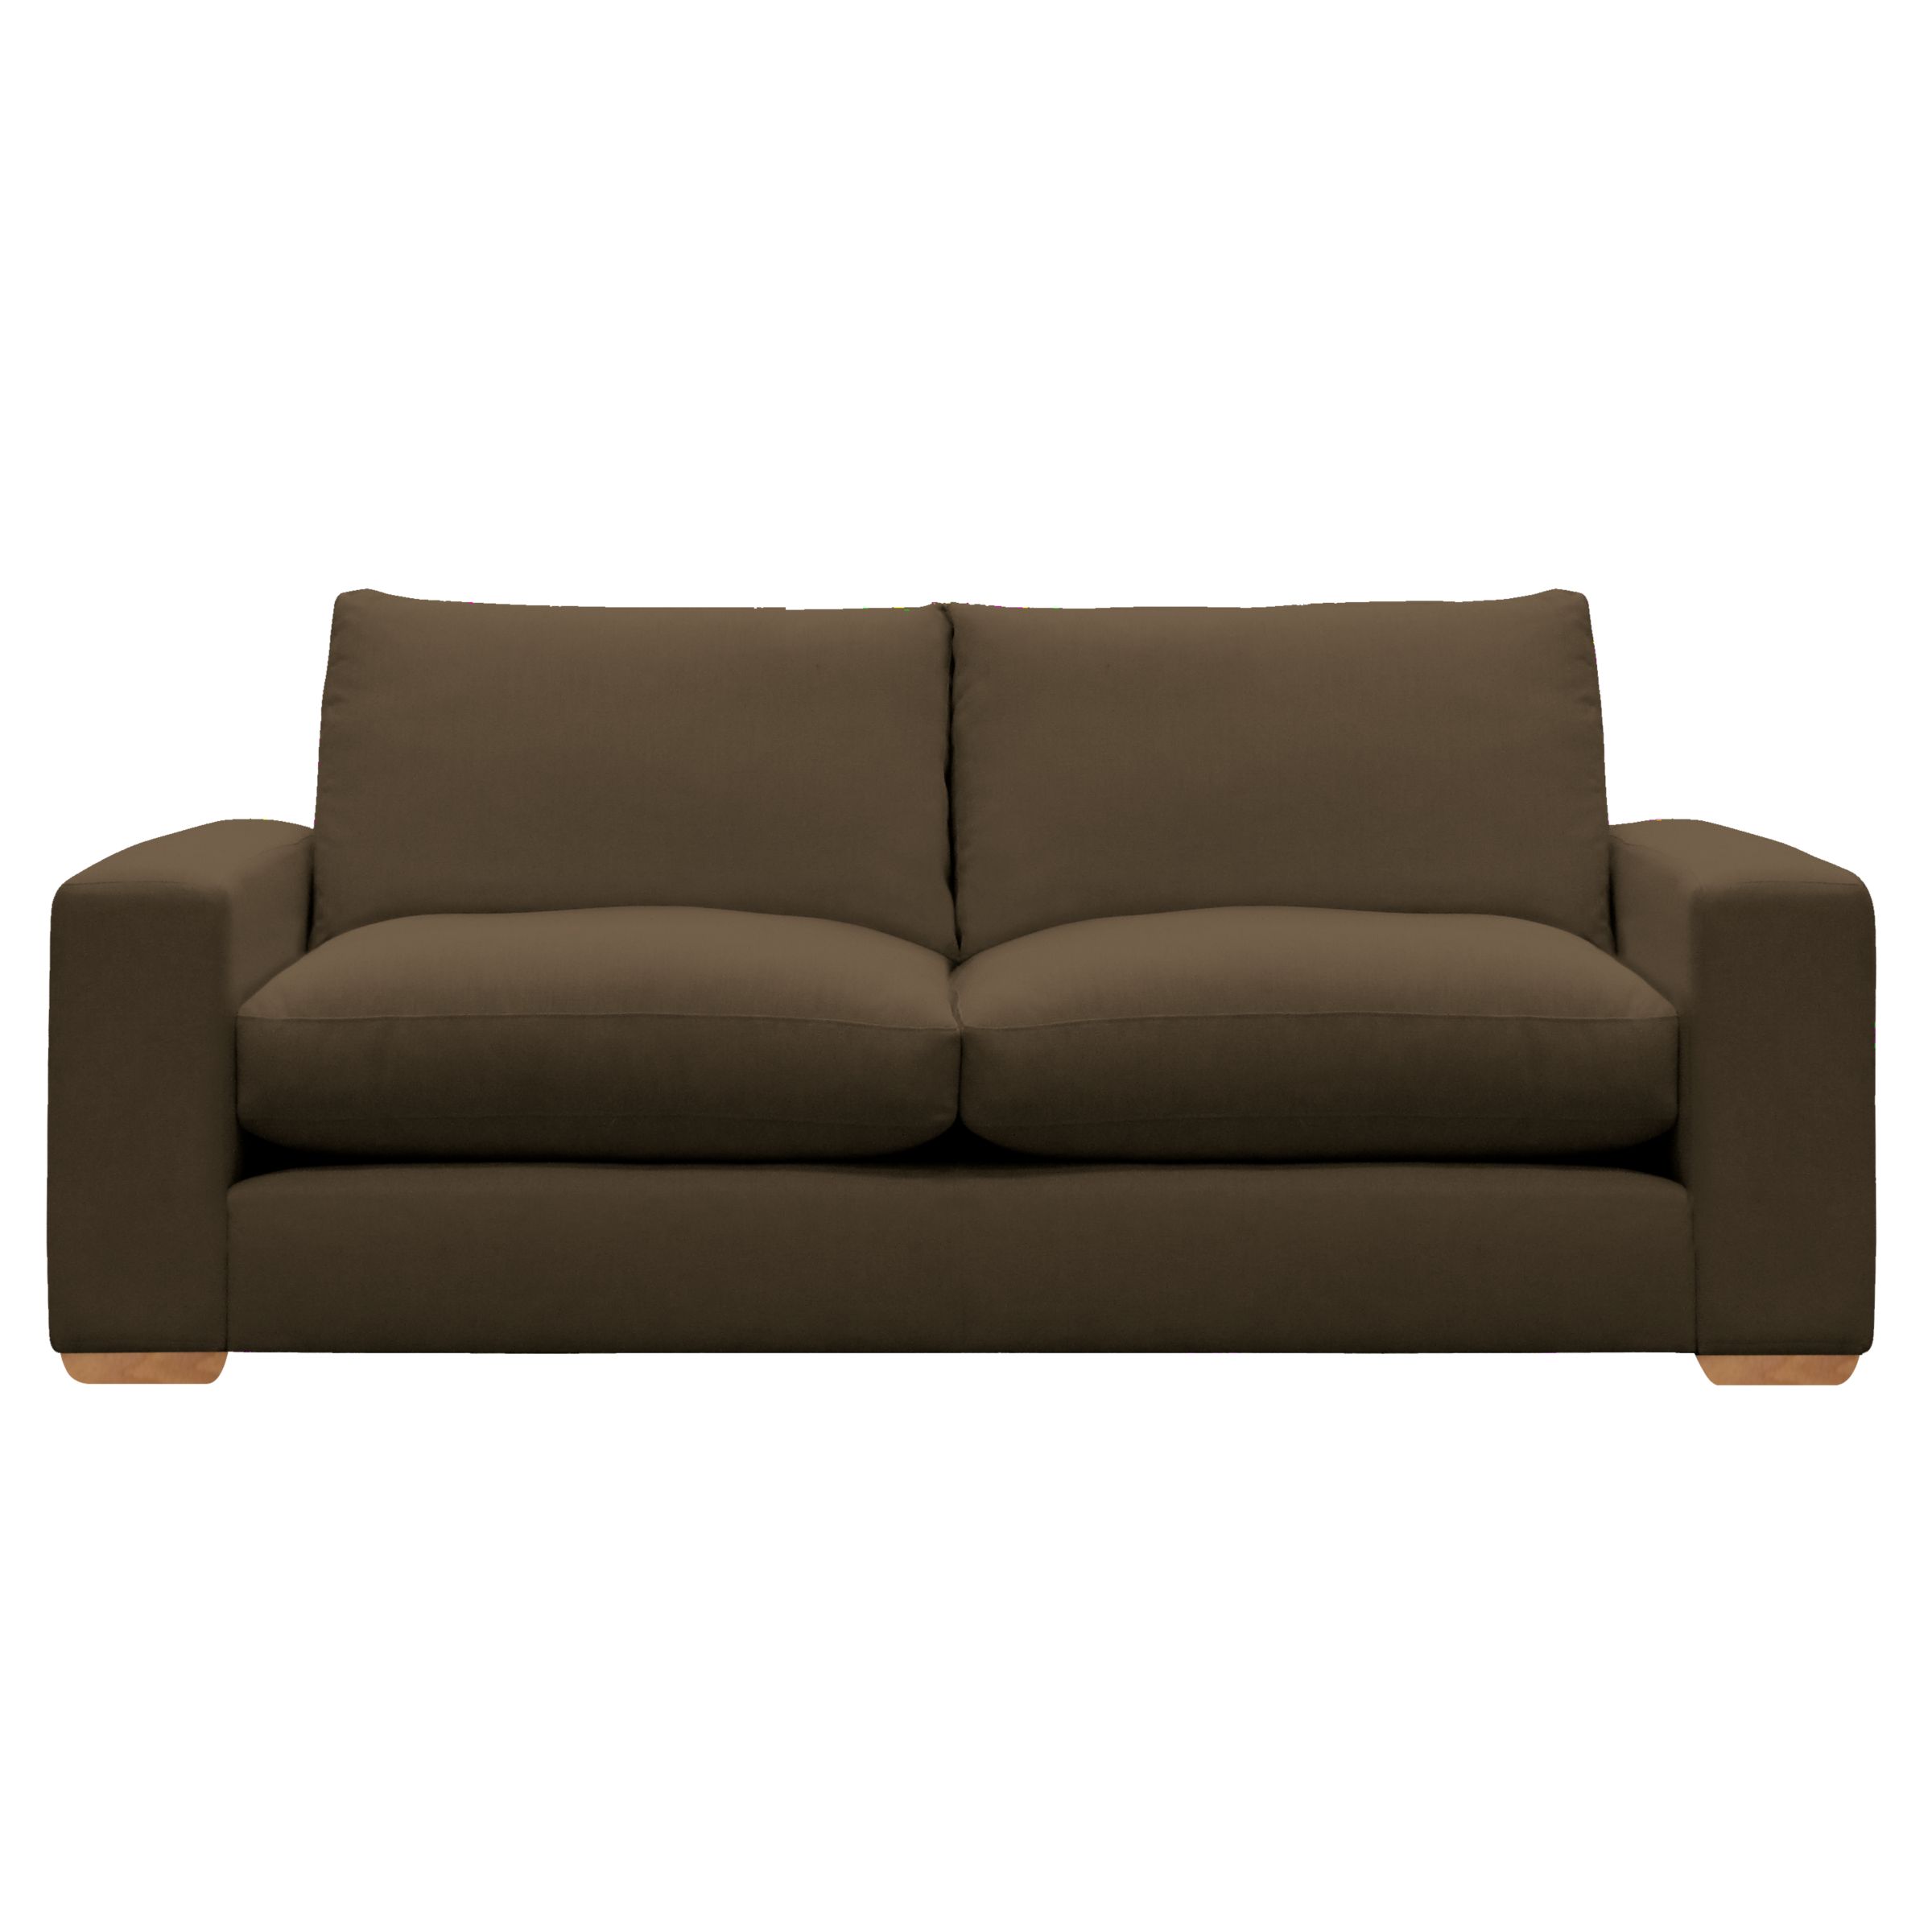 John Lewis Options Wide Arm Large Sofa, Eaton Chocolate, width 200cm